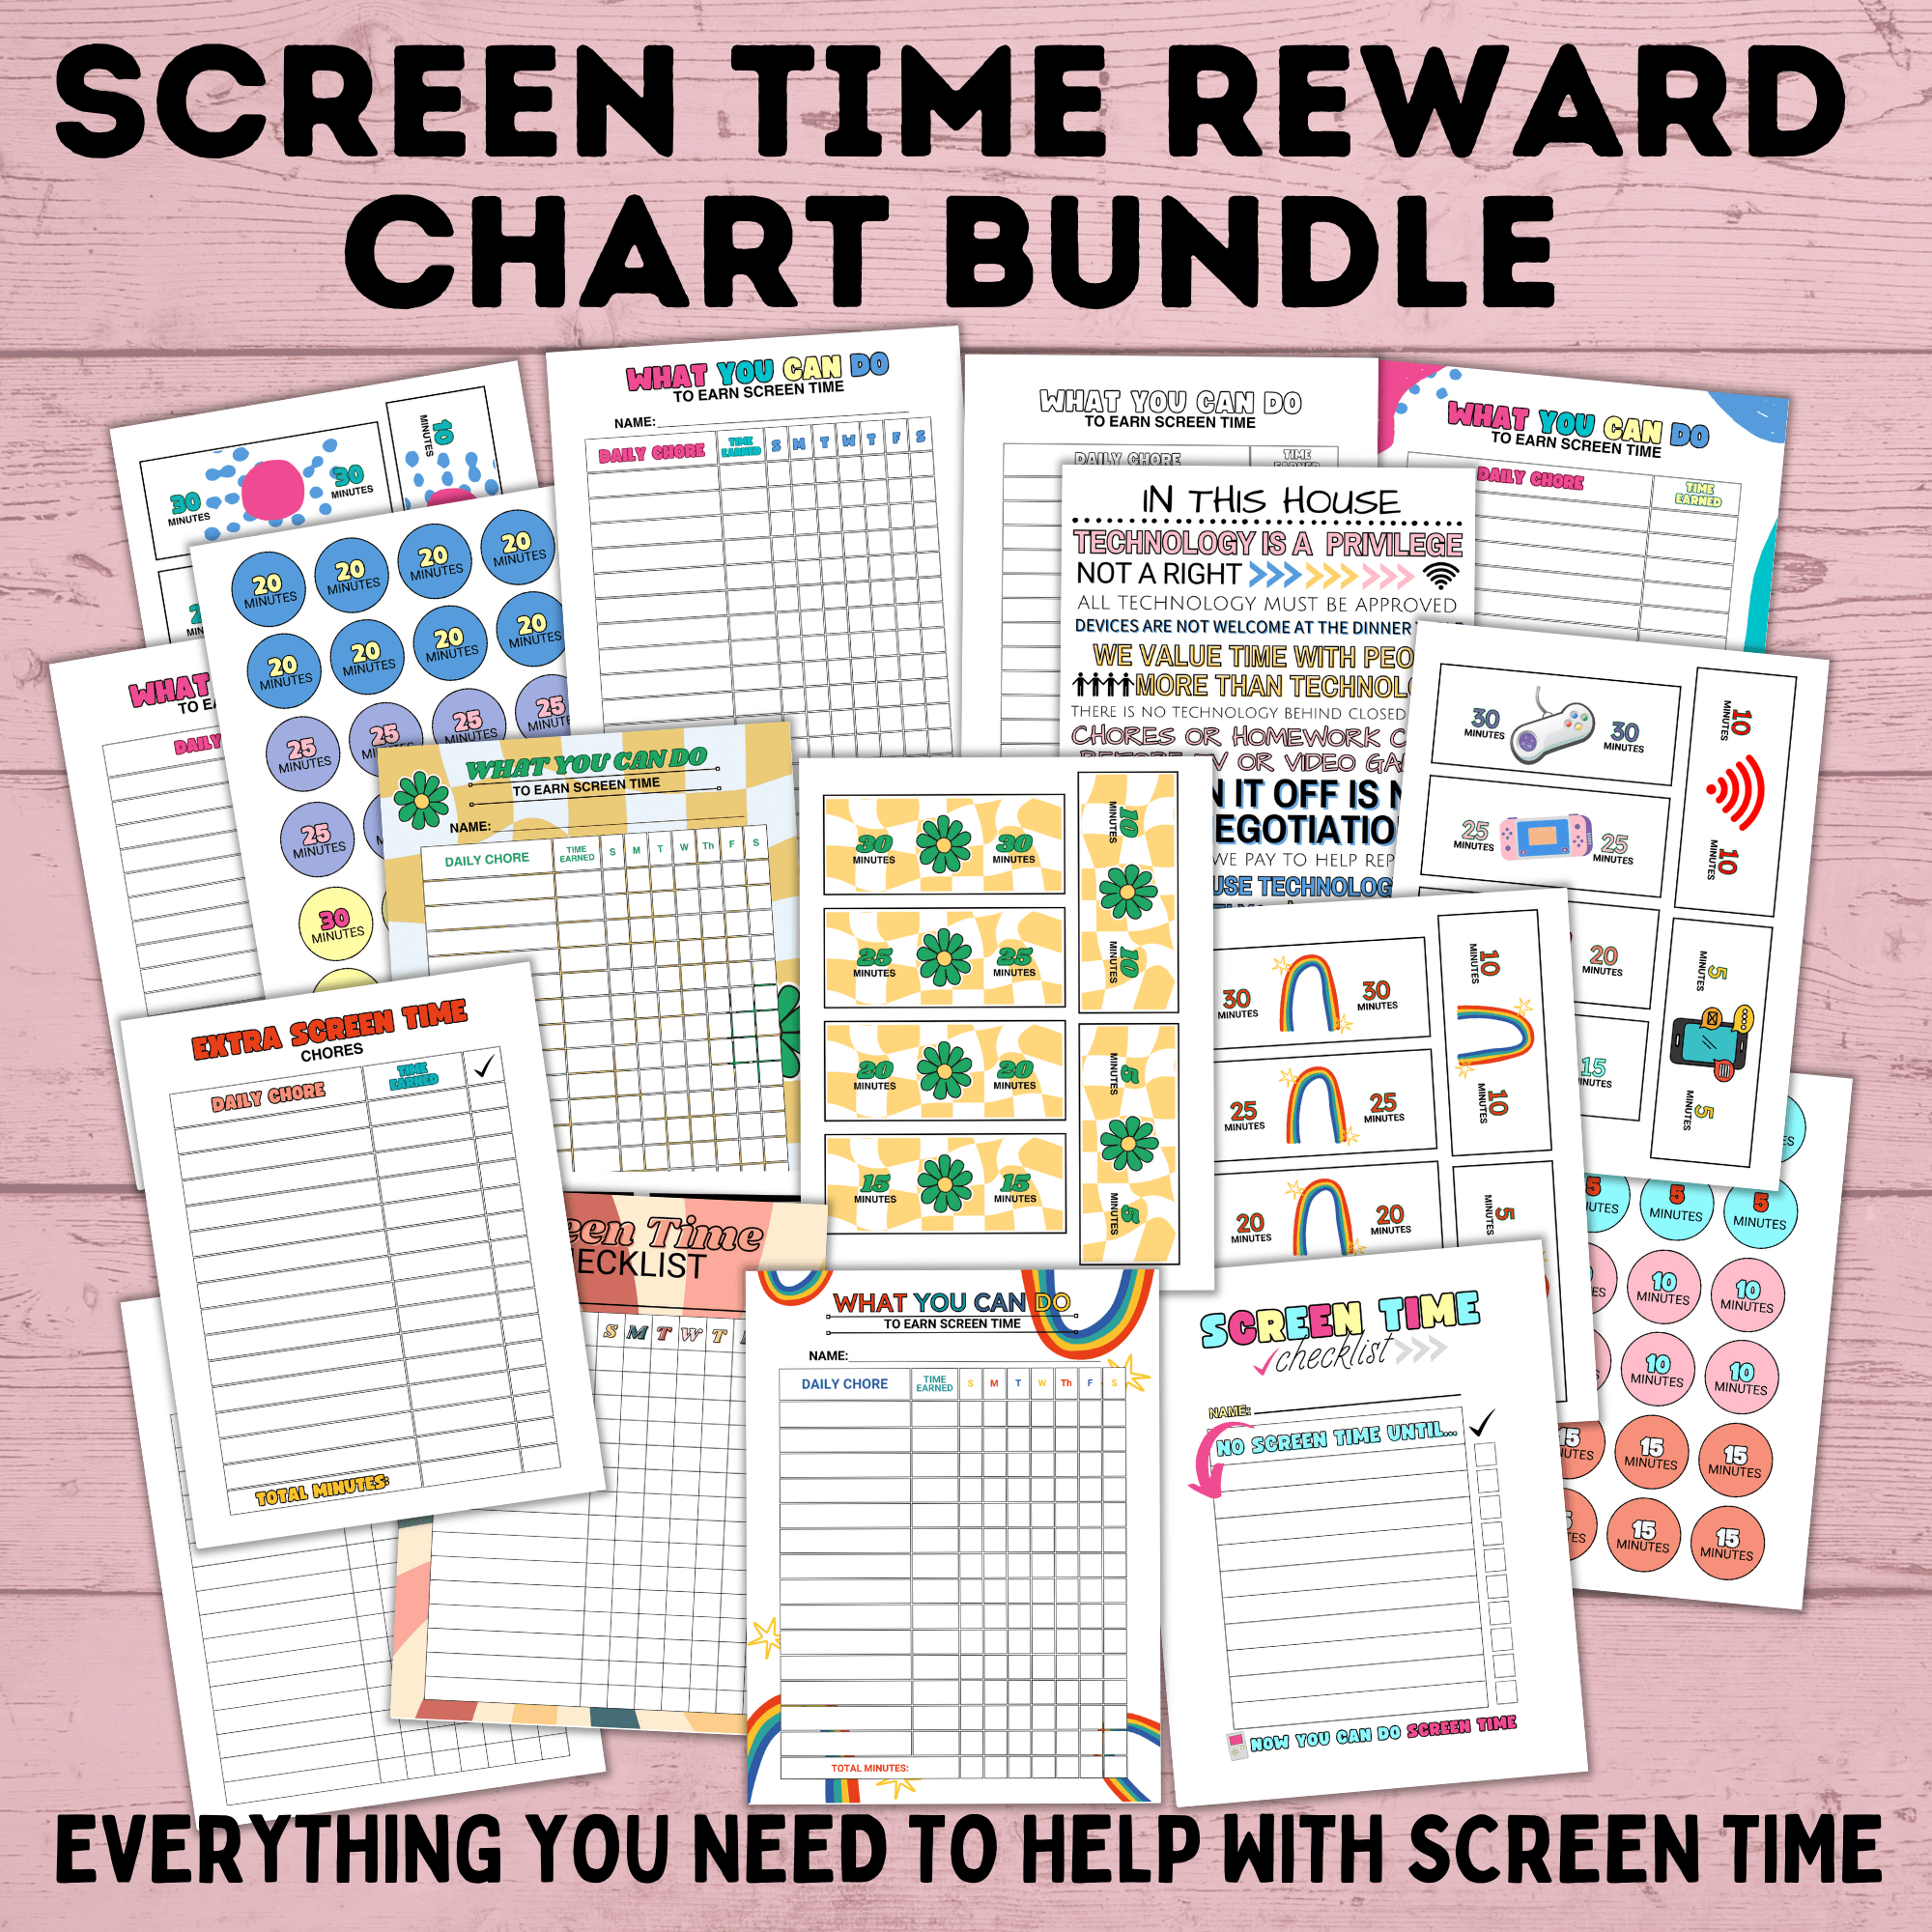 Screen time reward chart bundle mockup image.